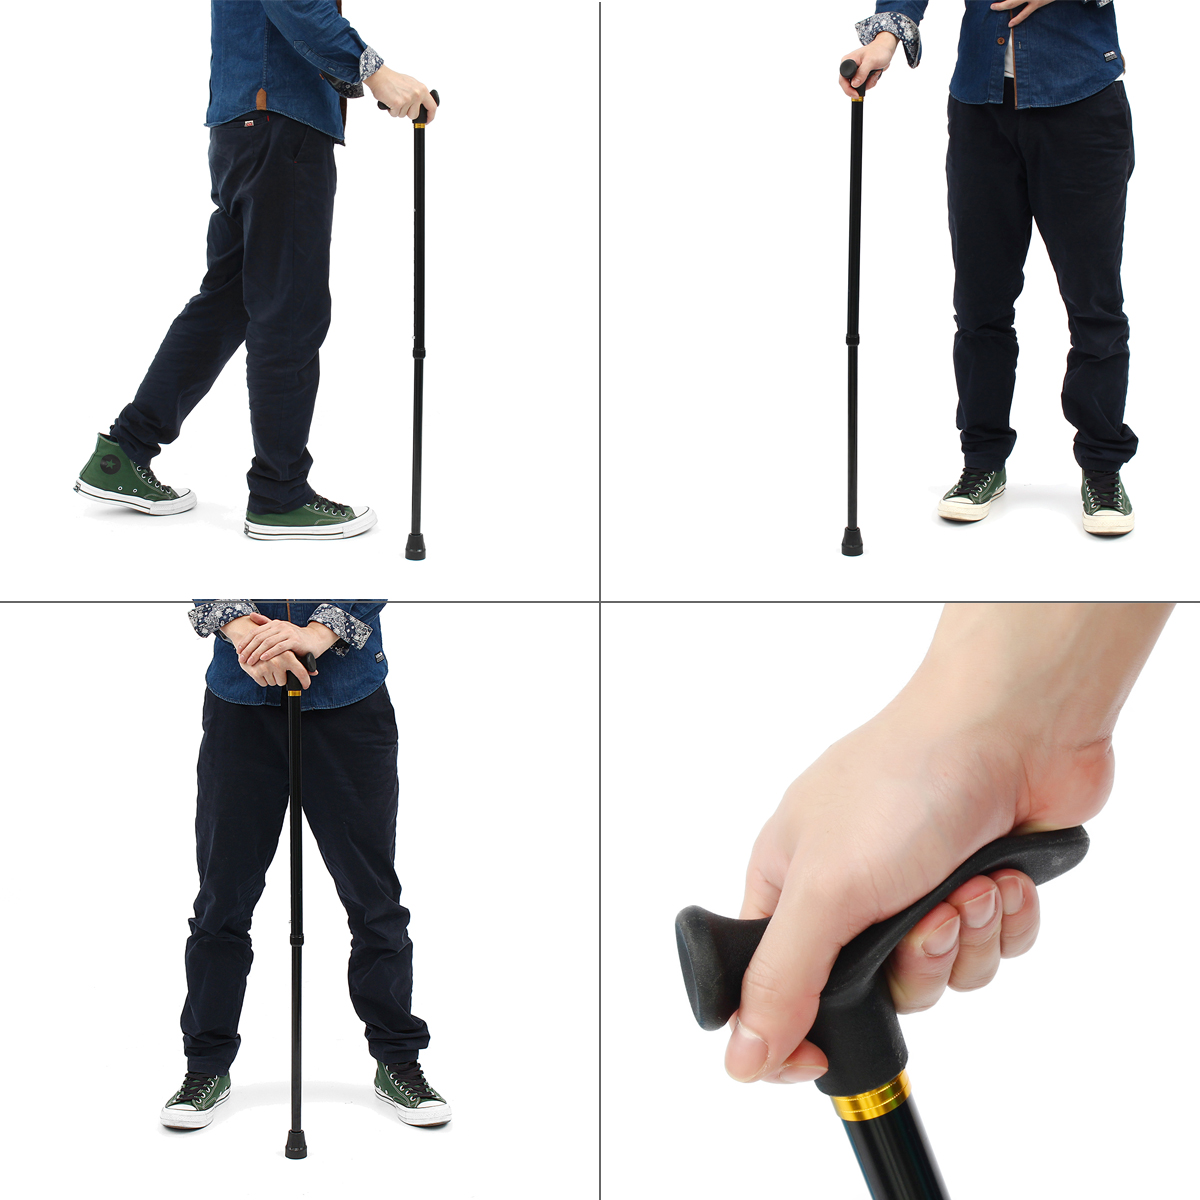 Ergonomic-Handle-Height-Adjustable-Walking-Aid-Cane-Stick-Arthritis-Comfort-Grip-Safety-1496360